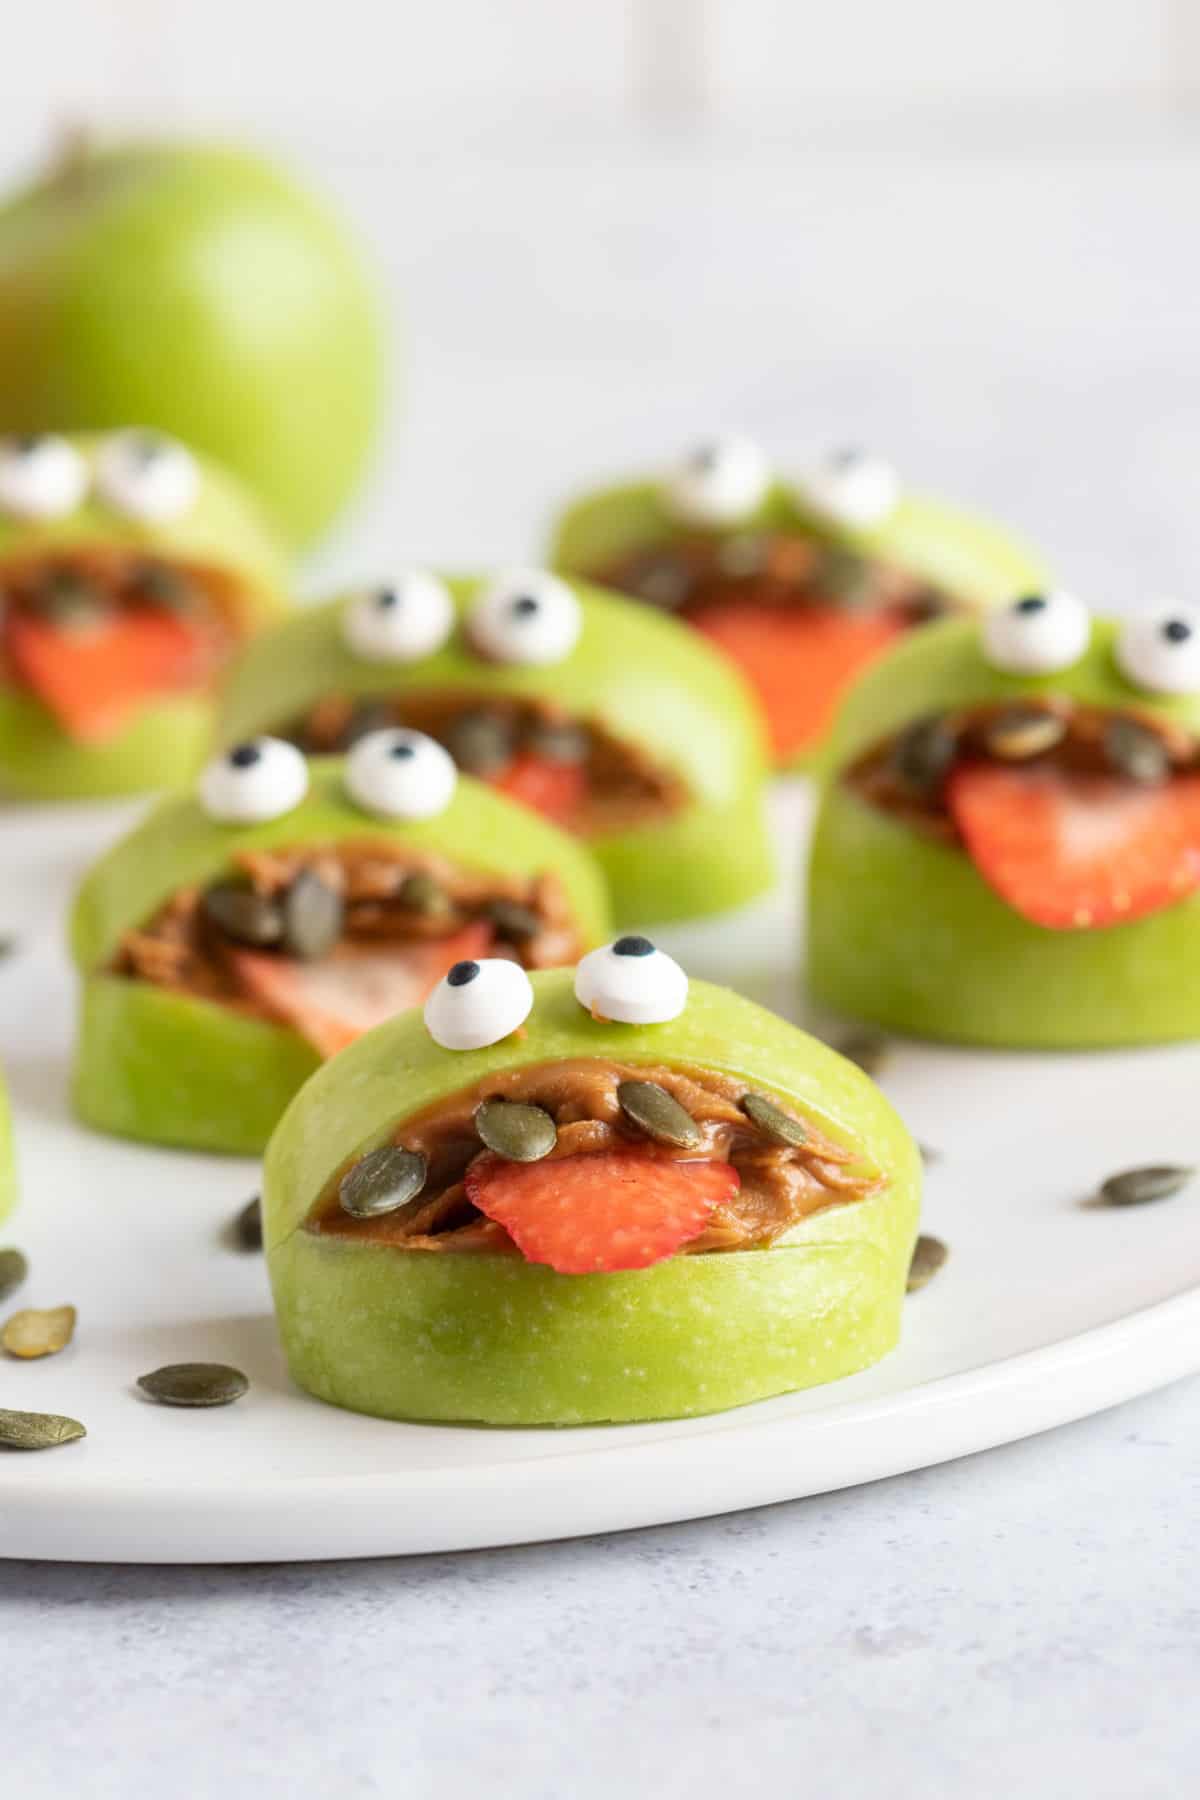 Green apple monsters on a platter.